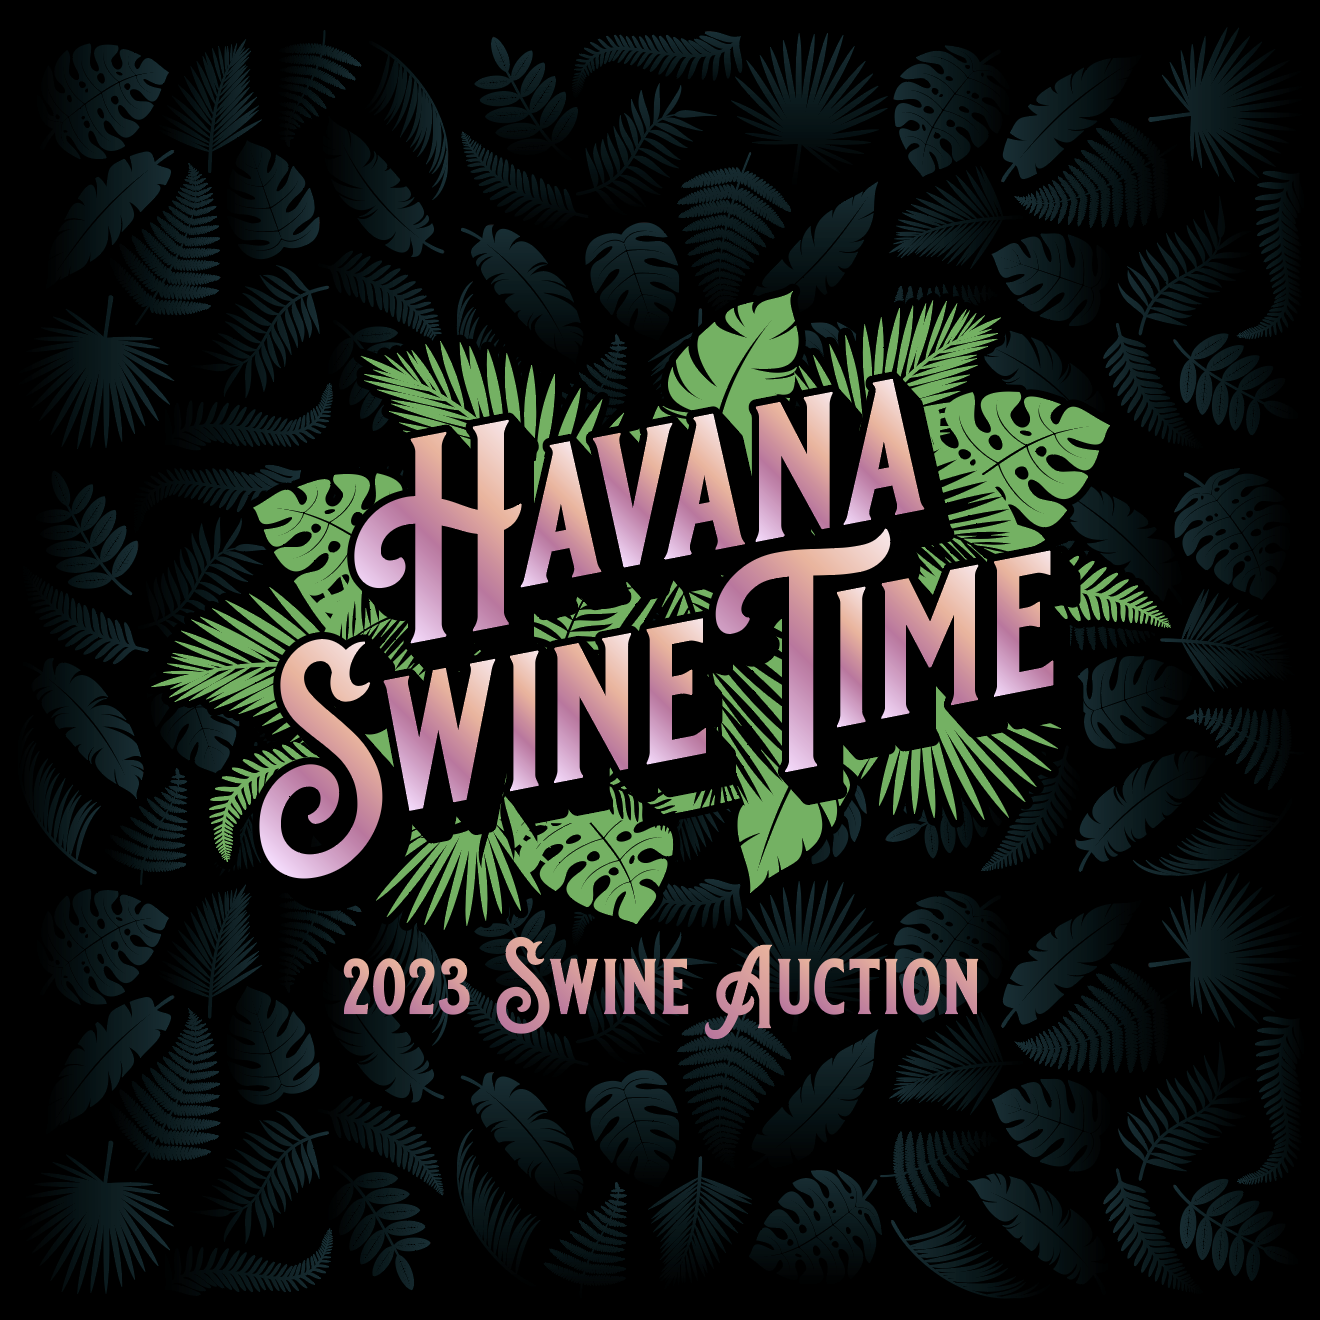 Houston Rodeo and Livestock Show Swine Auction 2023 Design